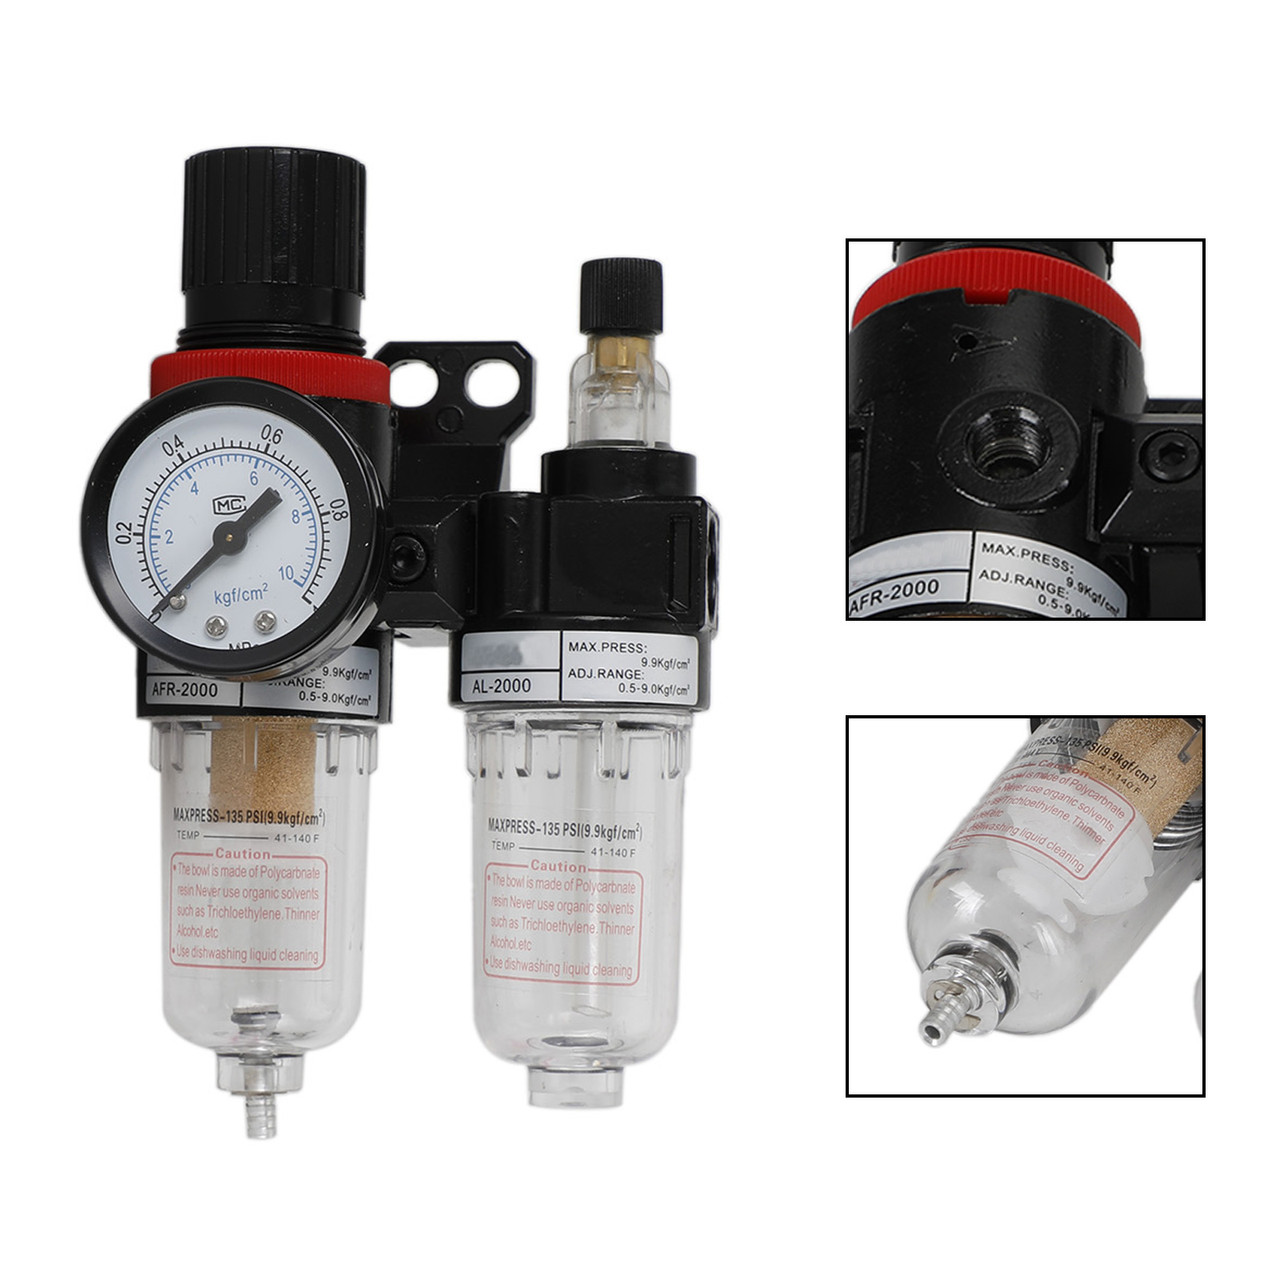 AFC-2000 Pneumatic Air Compressor Filter Regulator Moisture Trap Pressure Gauge